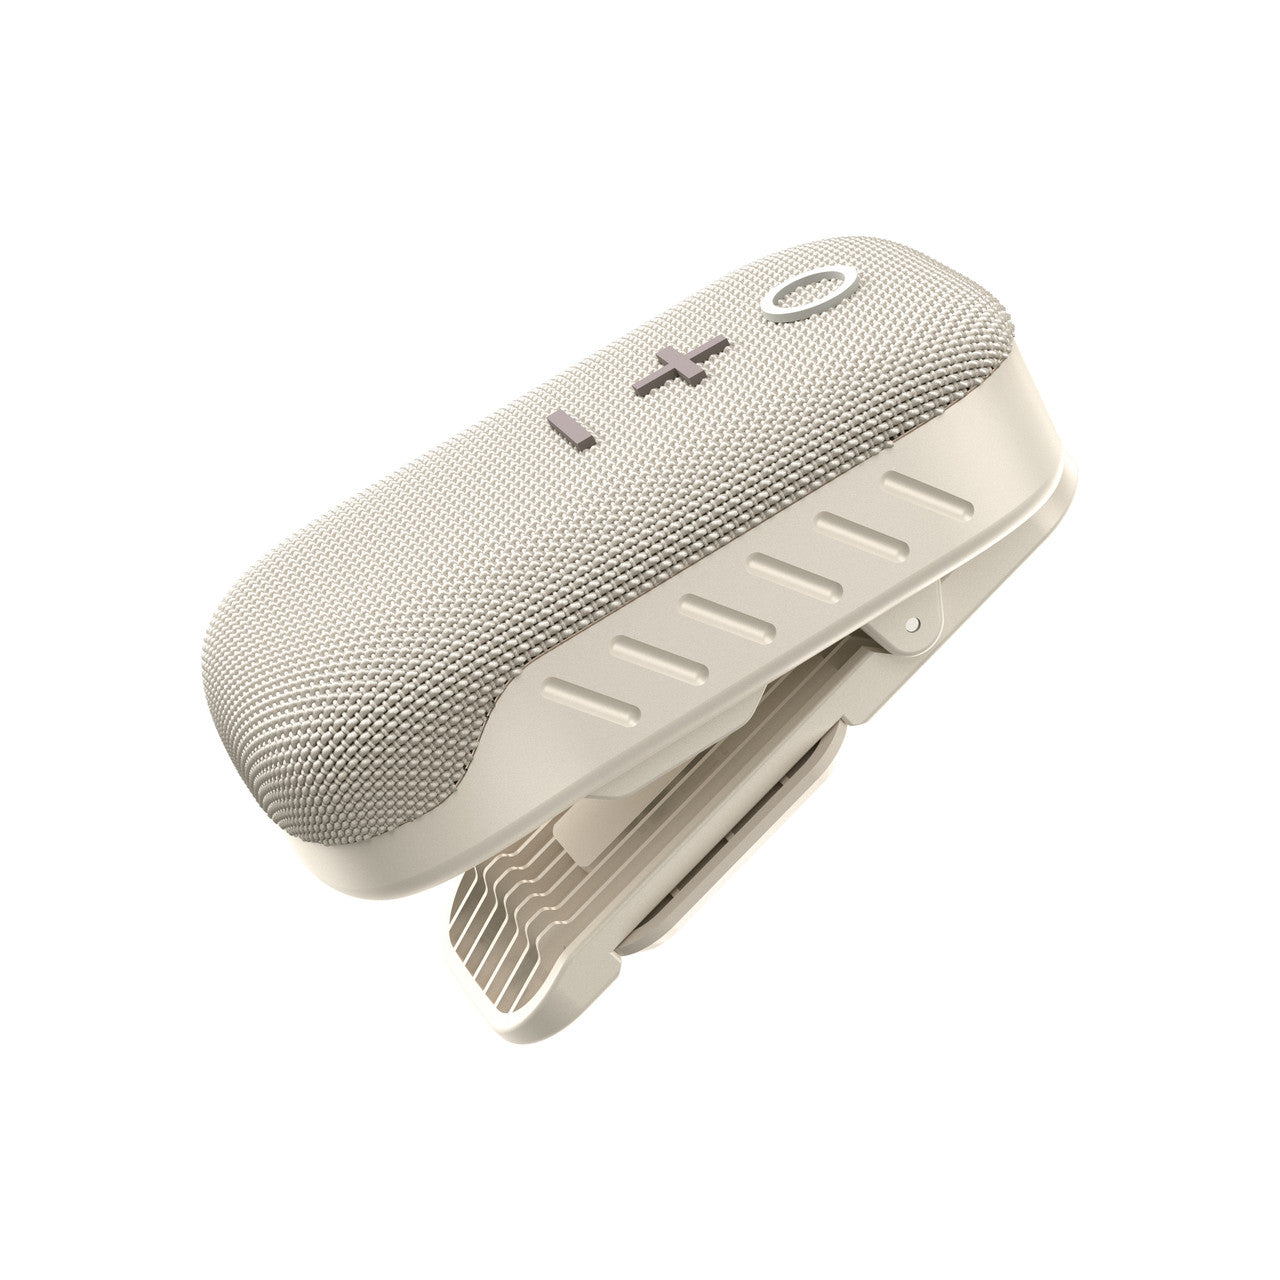 Image of goSPKR Wearable Clip-On Wireless Speaker with Magnet & Speakerphone.